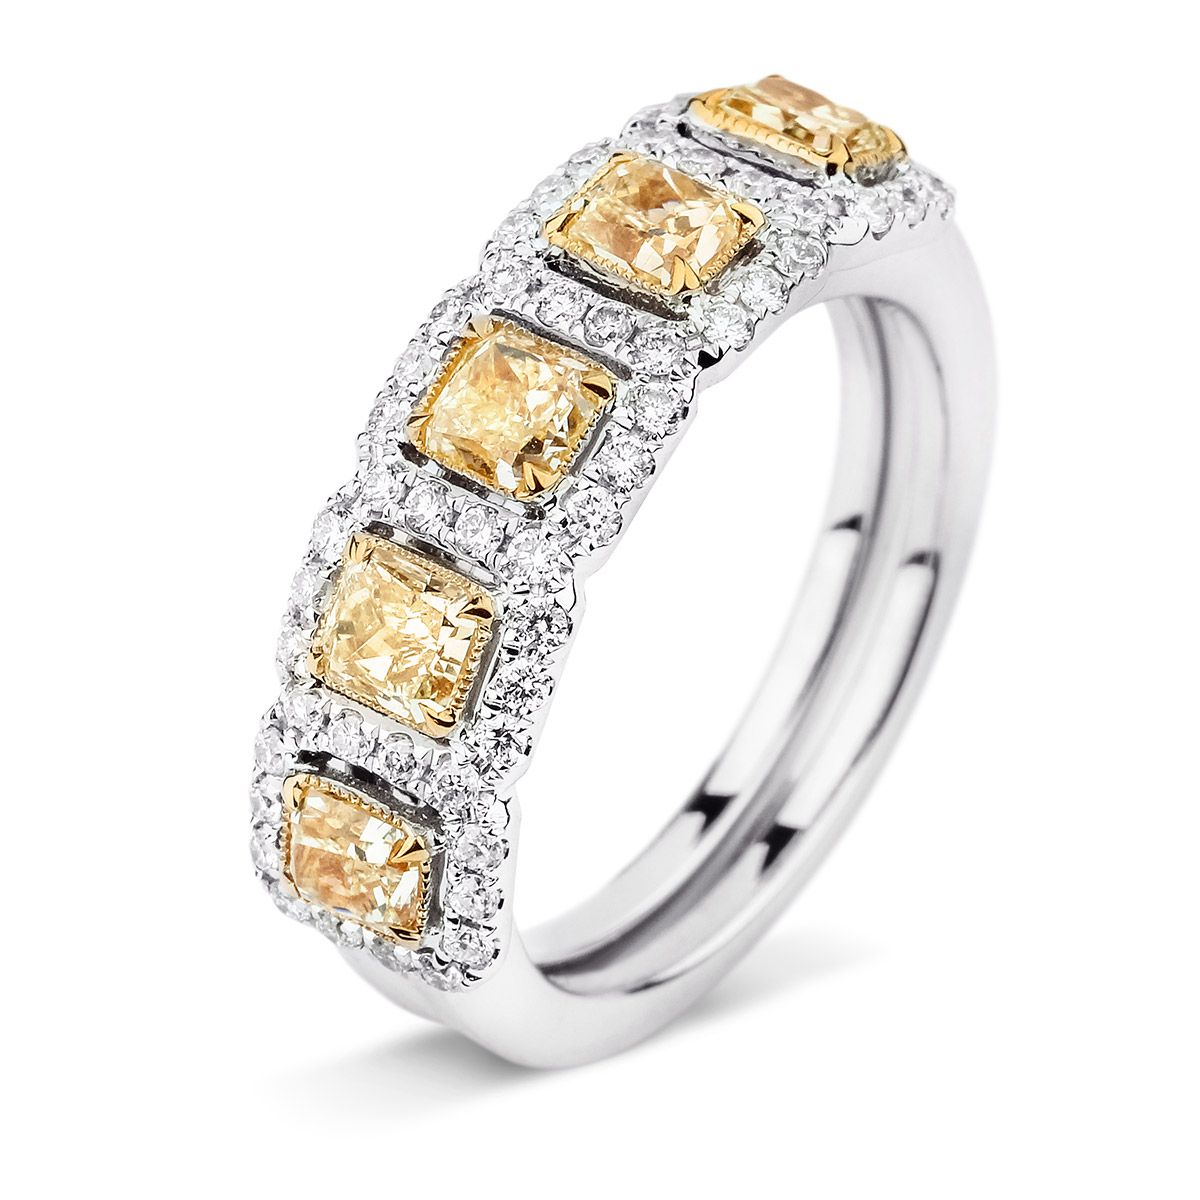 Fancy Intense Yellow Diamond Ring, 2.15 Ct. TW, Radiant shape